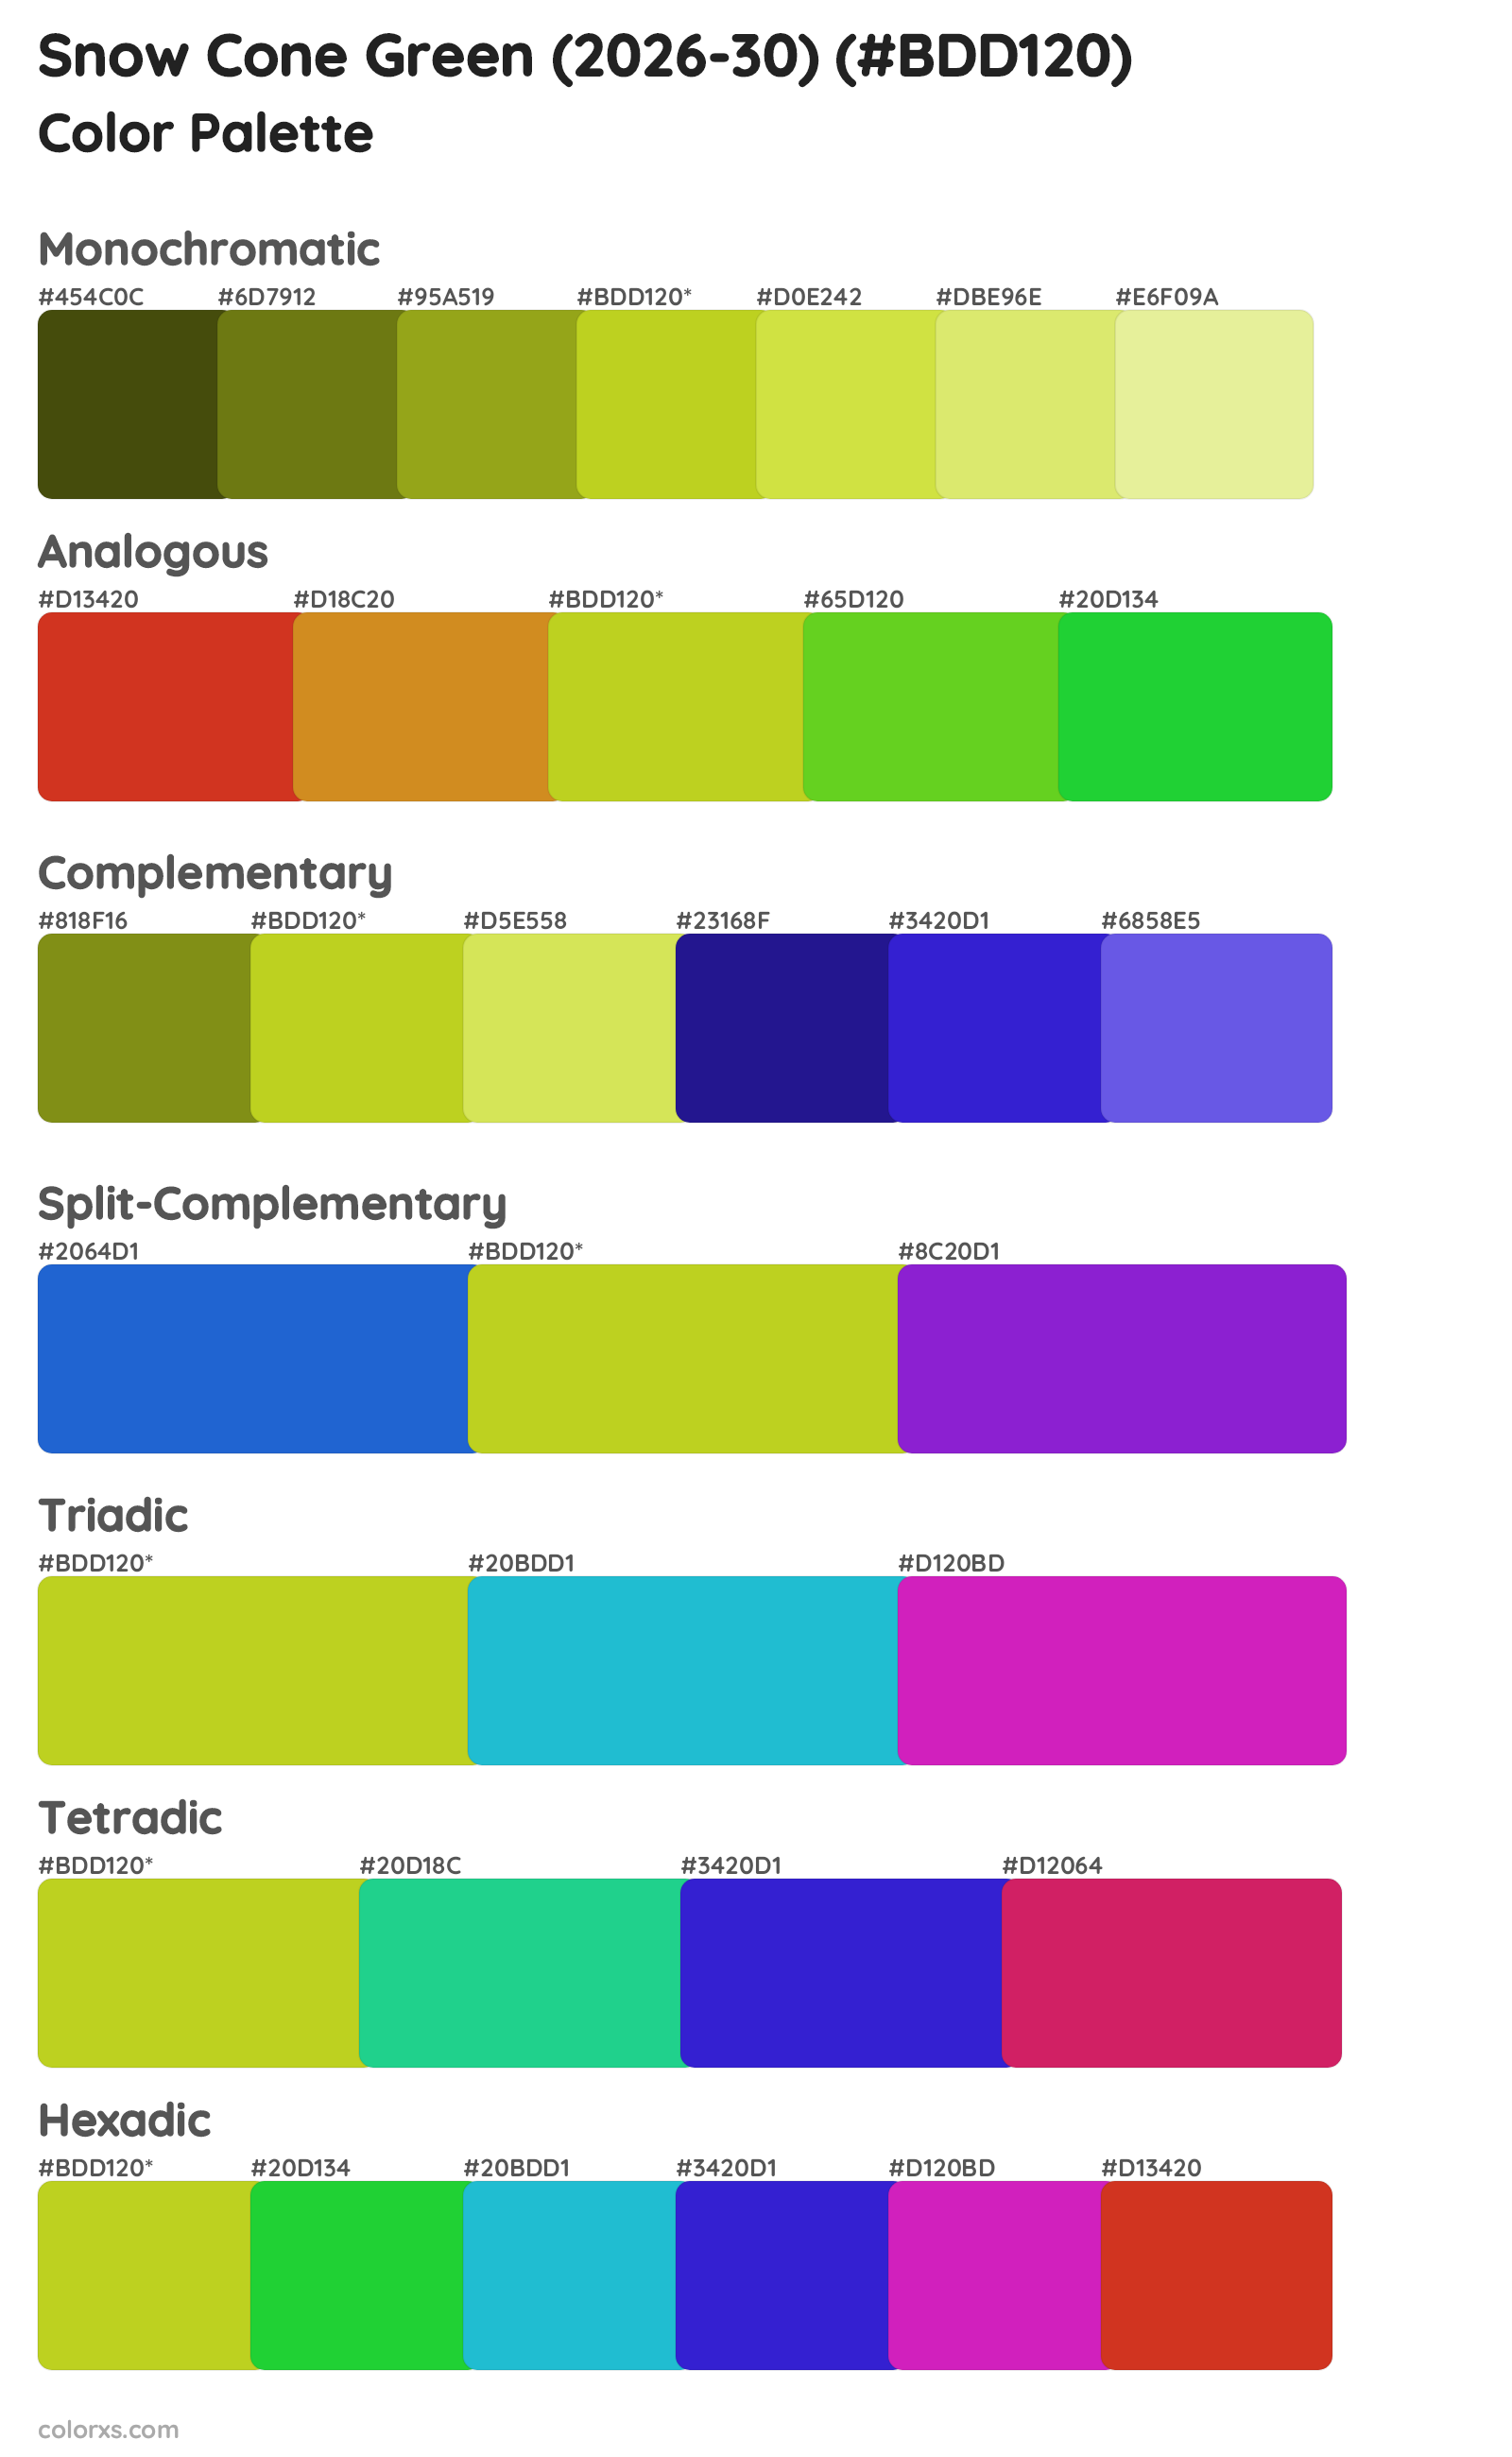 Snow Cone Green (2026-30) Color Scheme Palettes